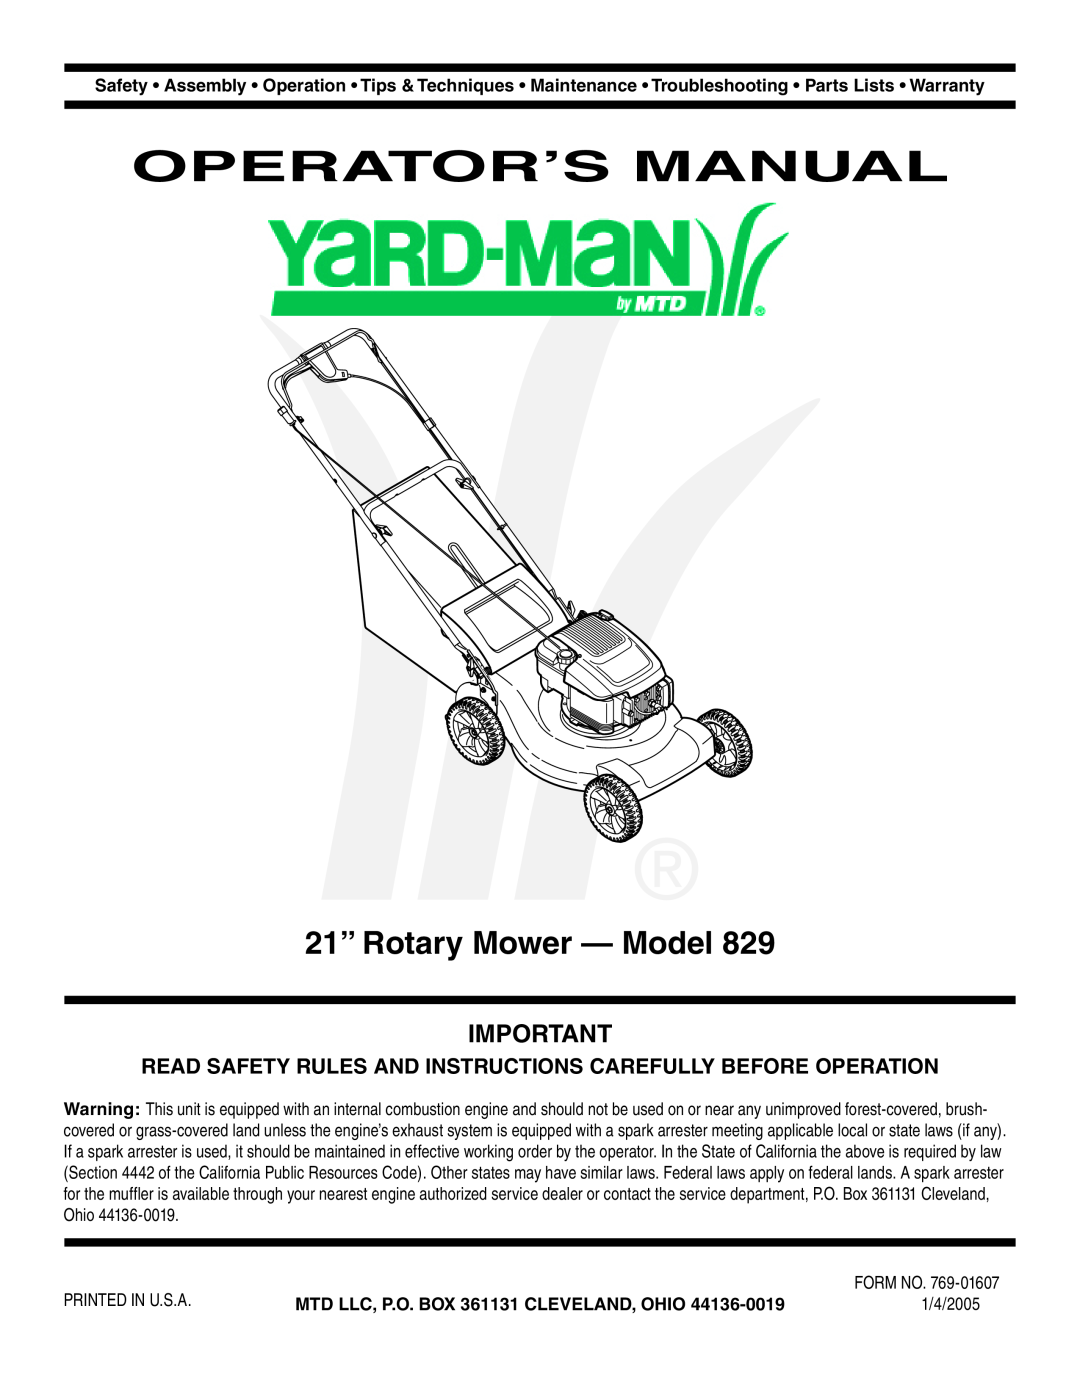 Yard-Man 829 warranty Operator’S Manual, 21” Rotary Mower - Model, MTD LLC, P.O. BOX 361131 CLEVELAND, OHIO 